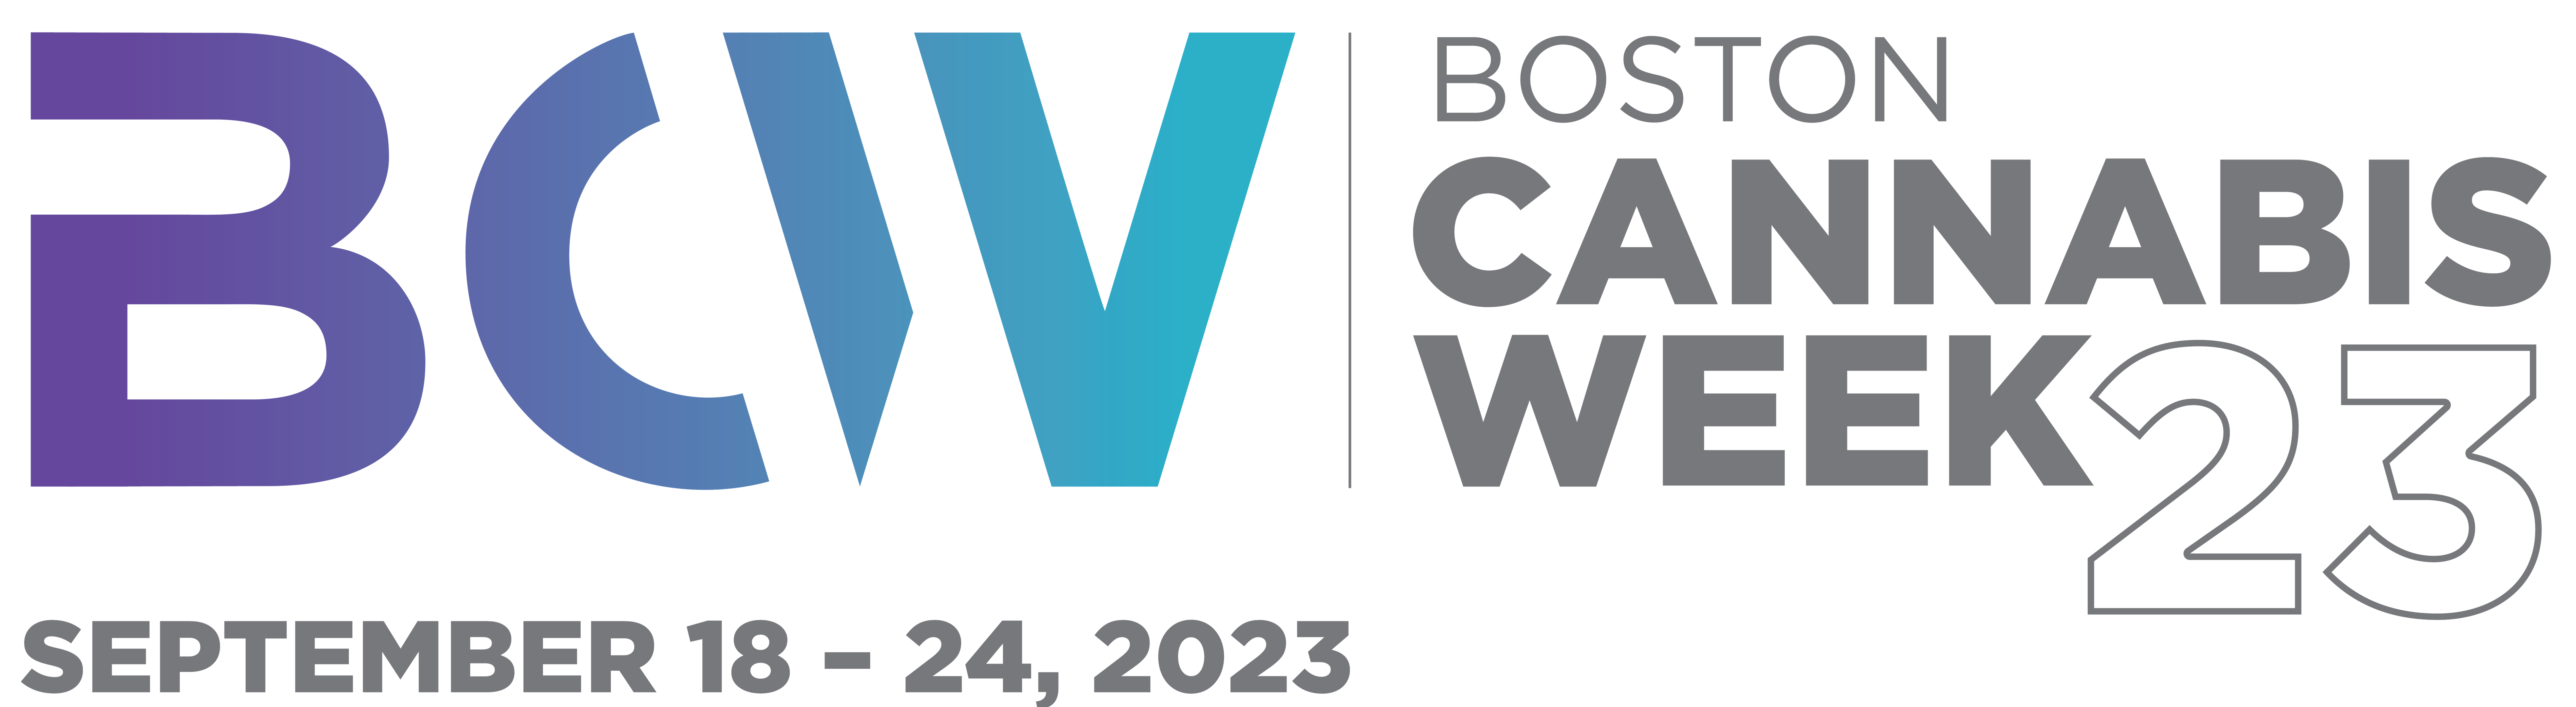 Boston Cannabis Week logo